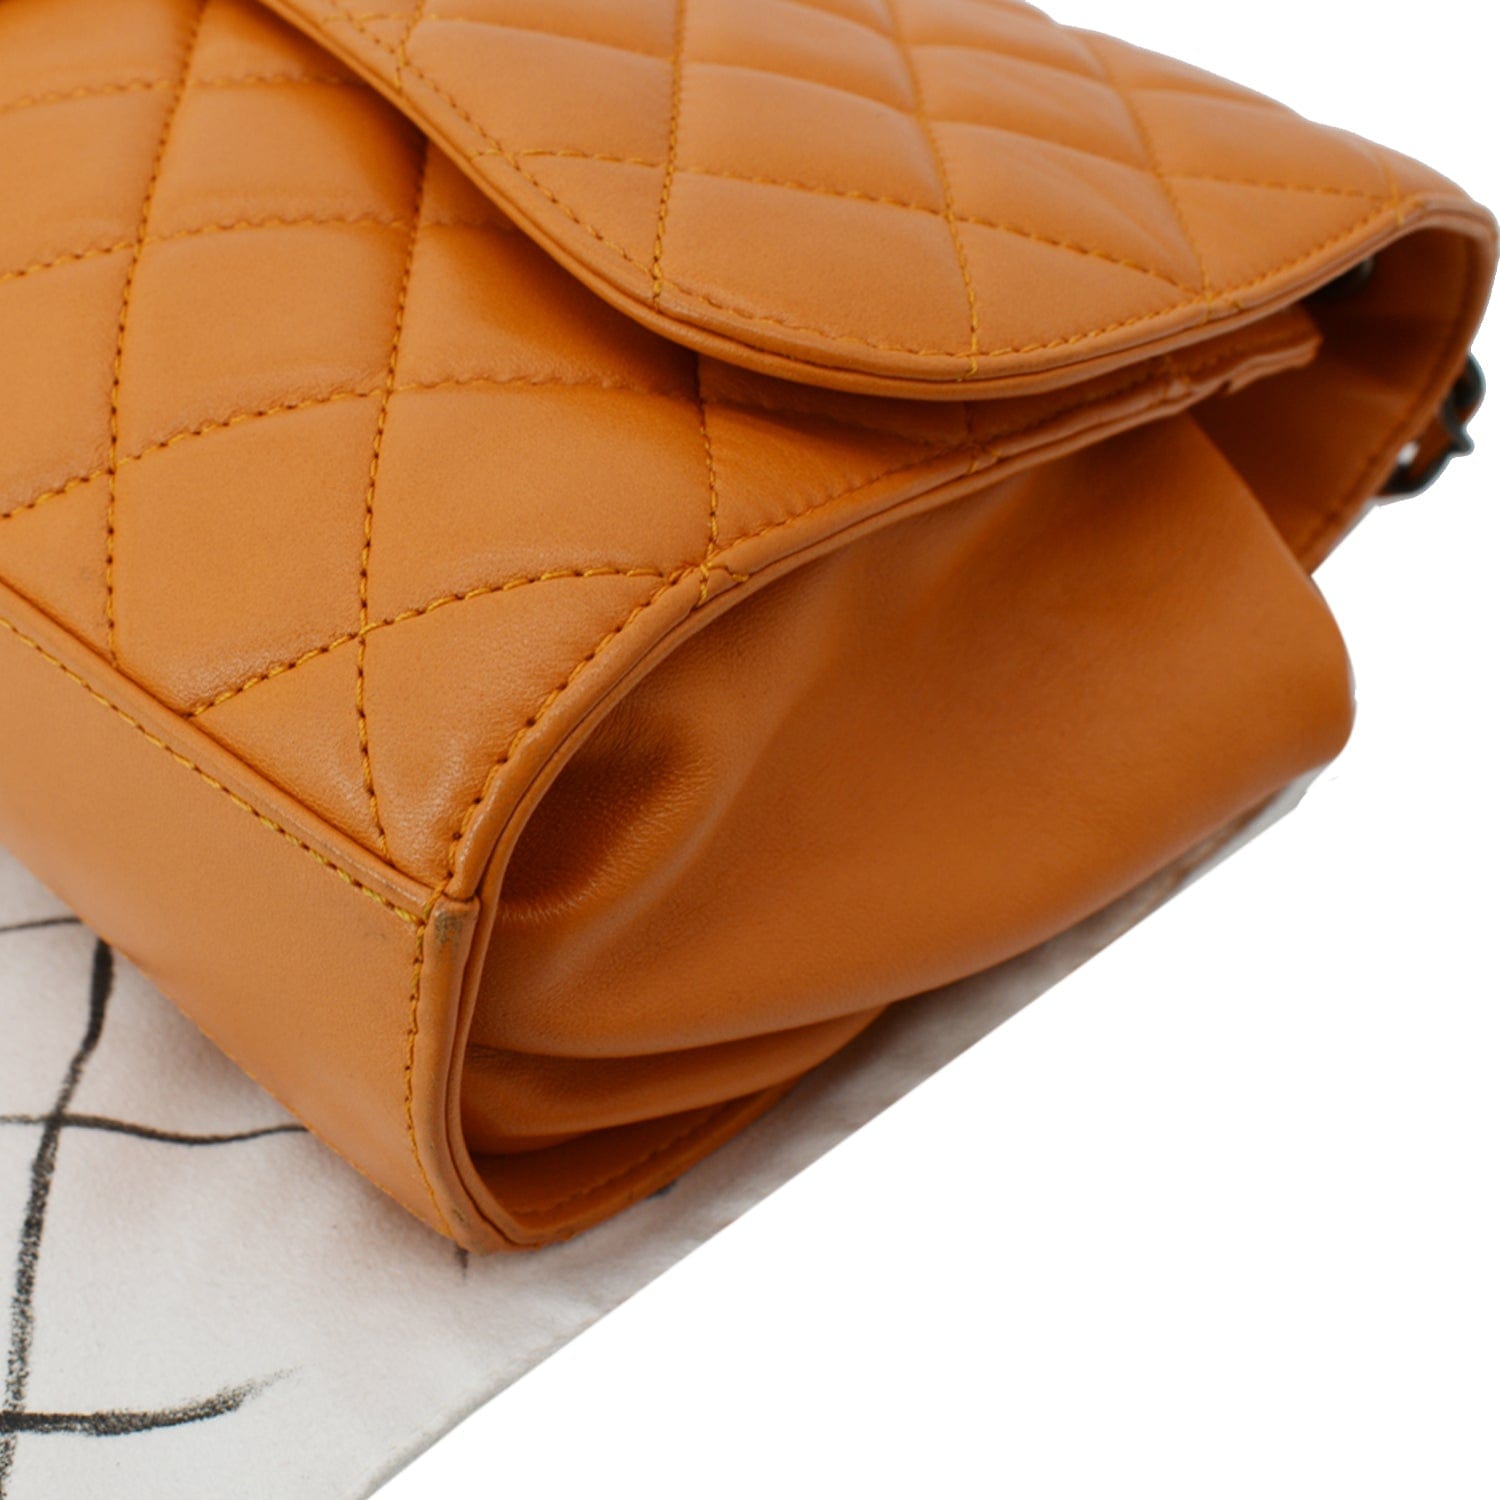 Vintage CHANEL beige lambskin classic 2.55 shoulder bag with